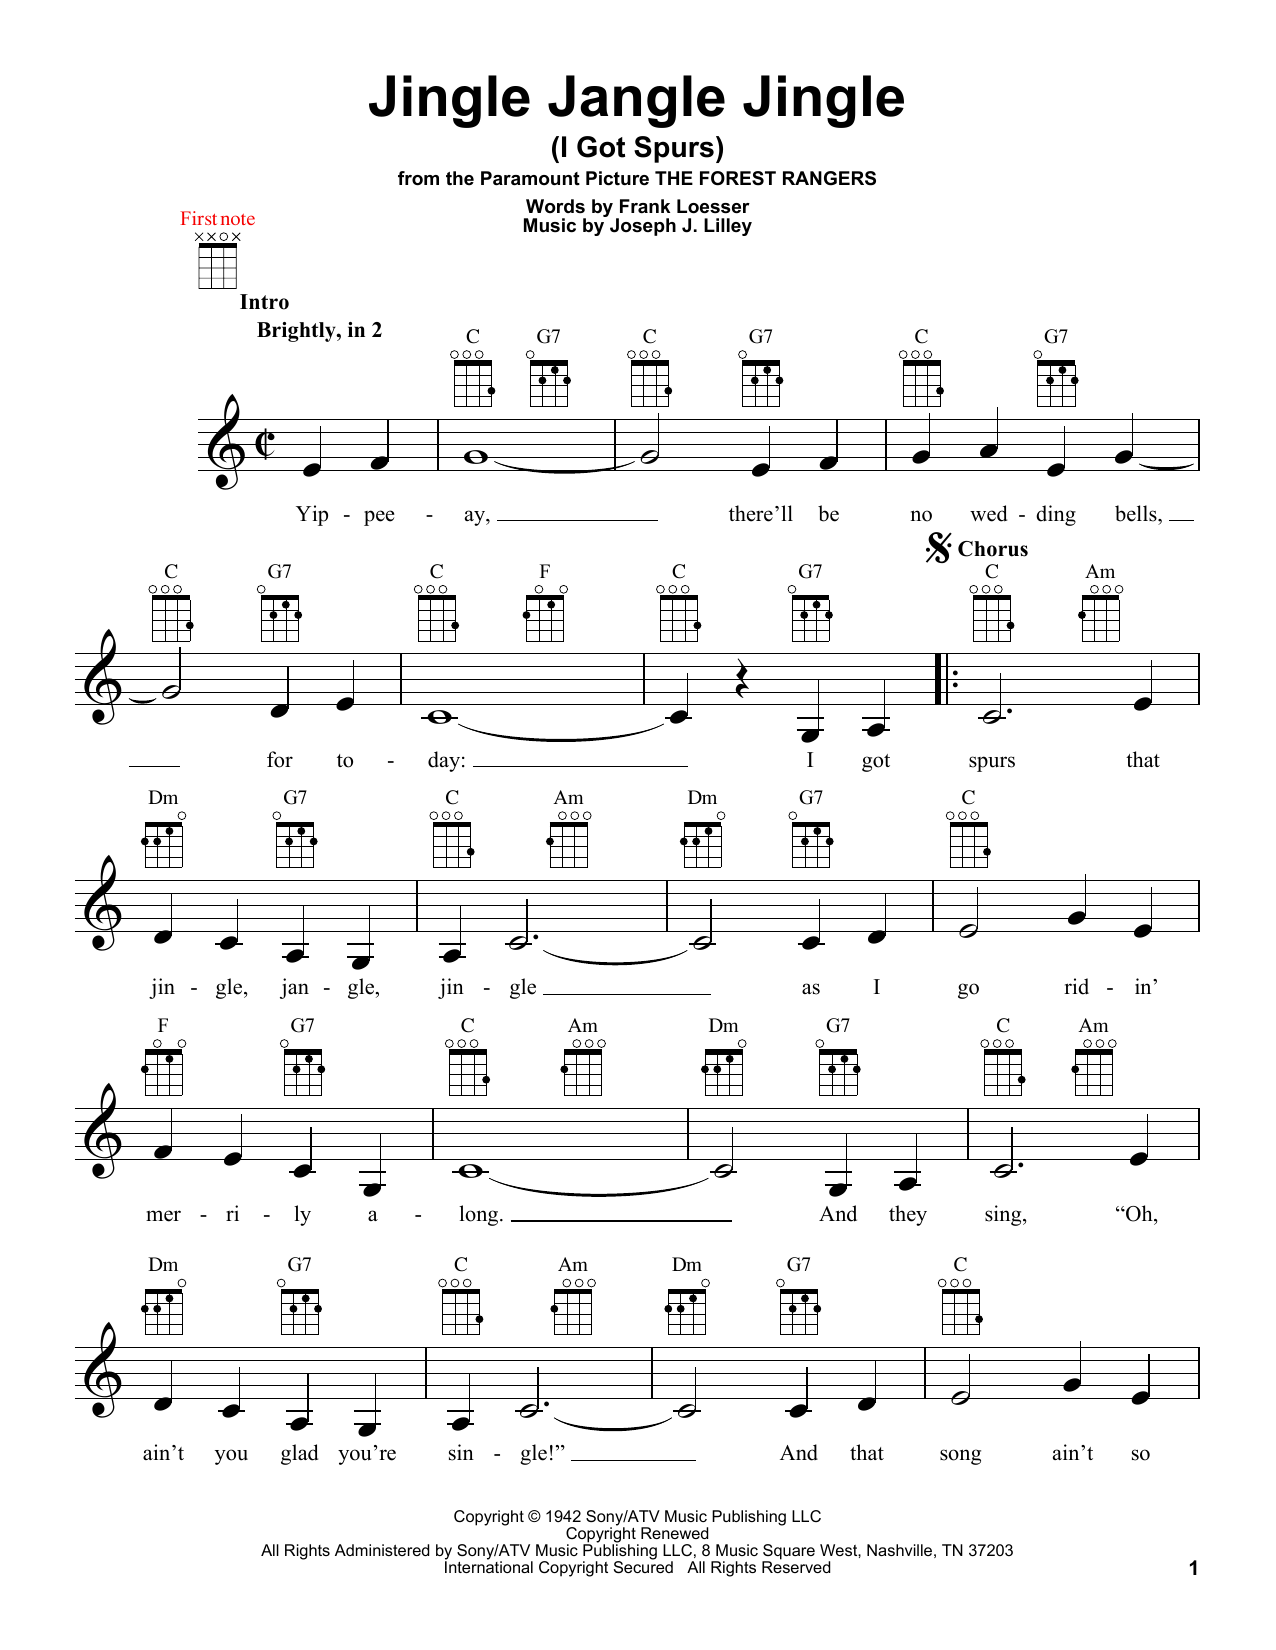 Frank Loesser Jingle Jangle Jingle (I Got Spurs) Sheet Music Notes & Chords for Melody Line, Lyrics & Chords - Download or Print PDF